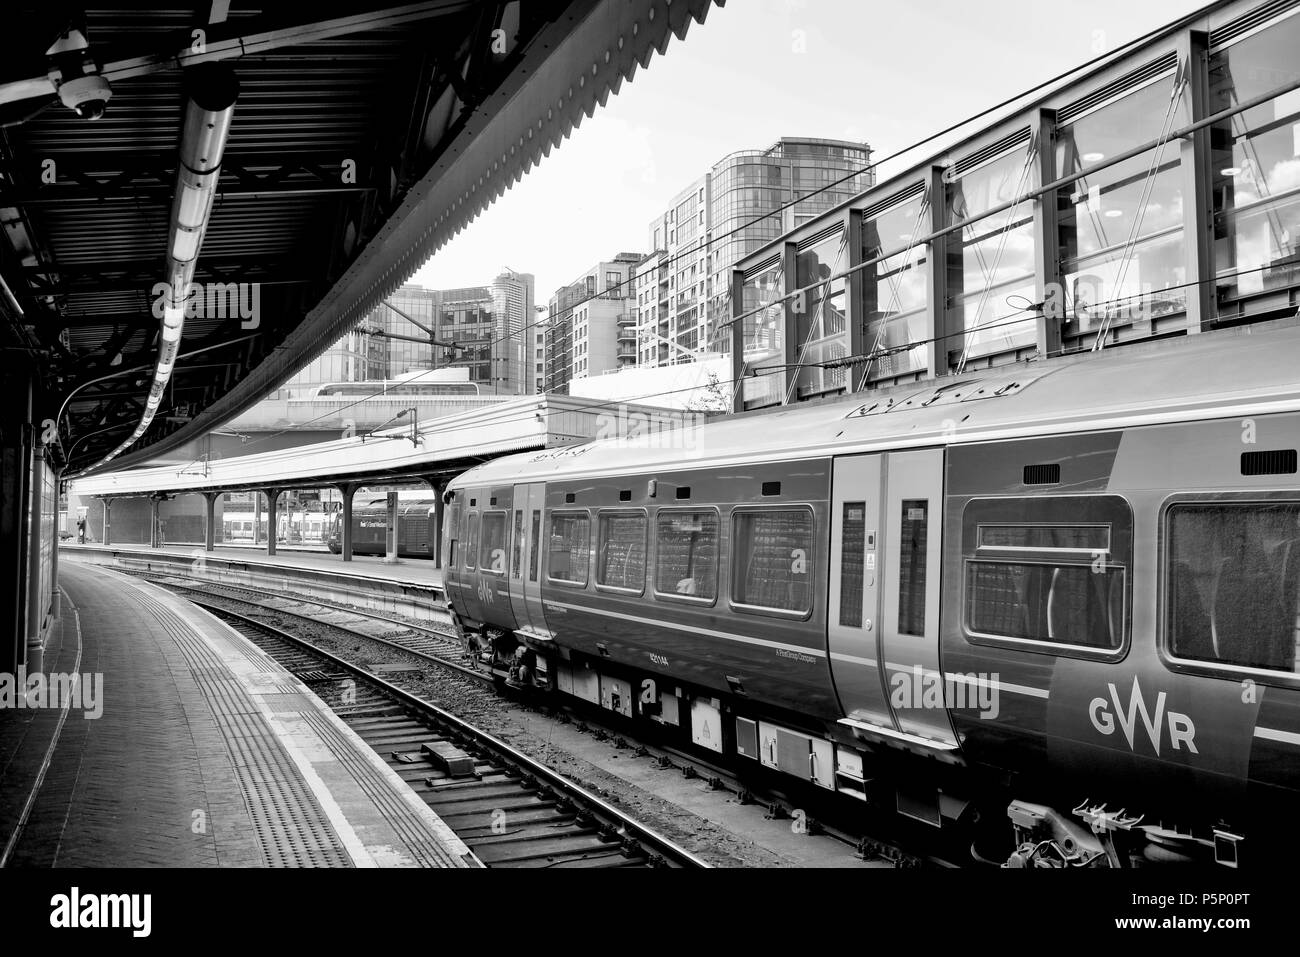 GWR elektrische Zug am Bahnhof London Paddington Stockfoto